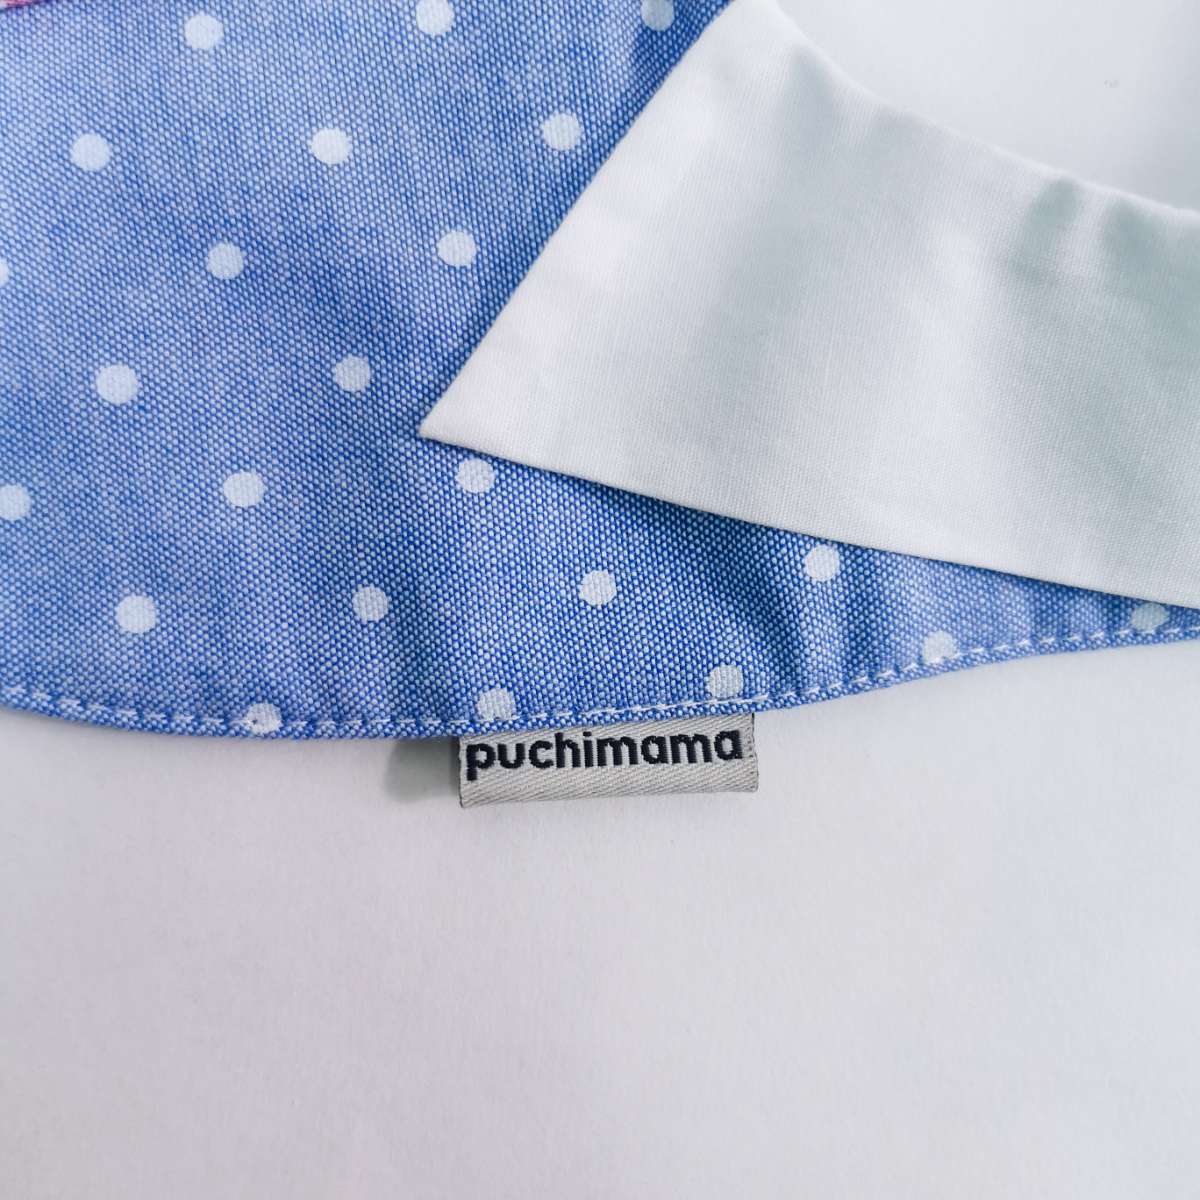 puchimama ผ้ากันน้ำลายเปื้อน  รุ่น Necktie